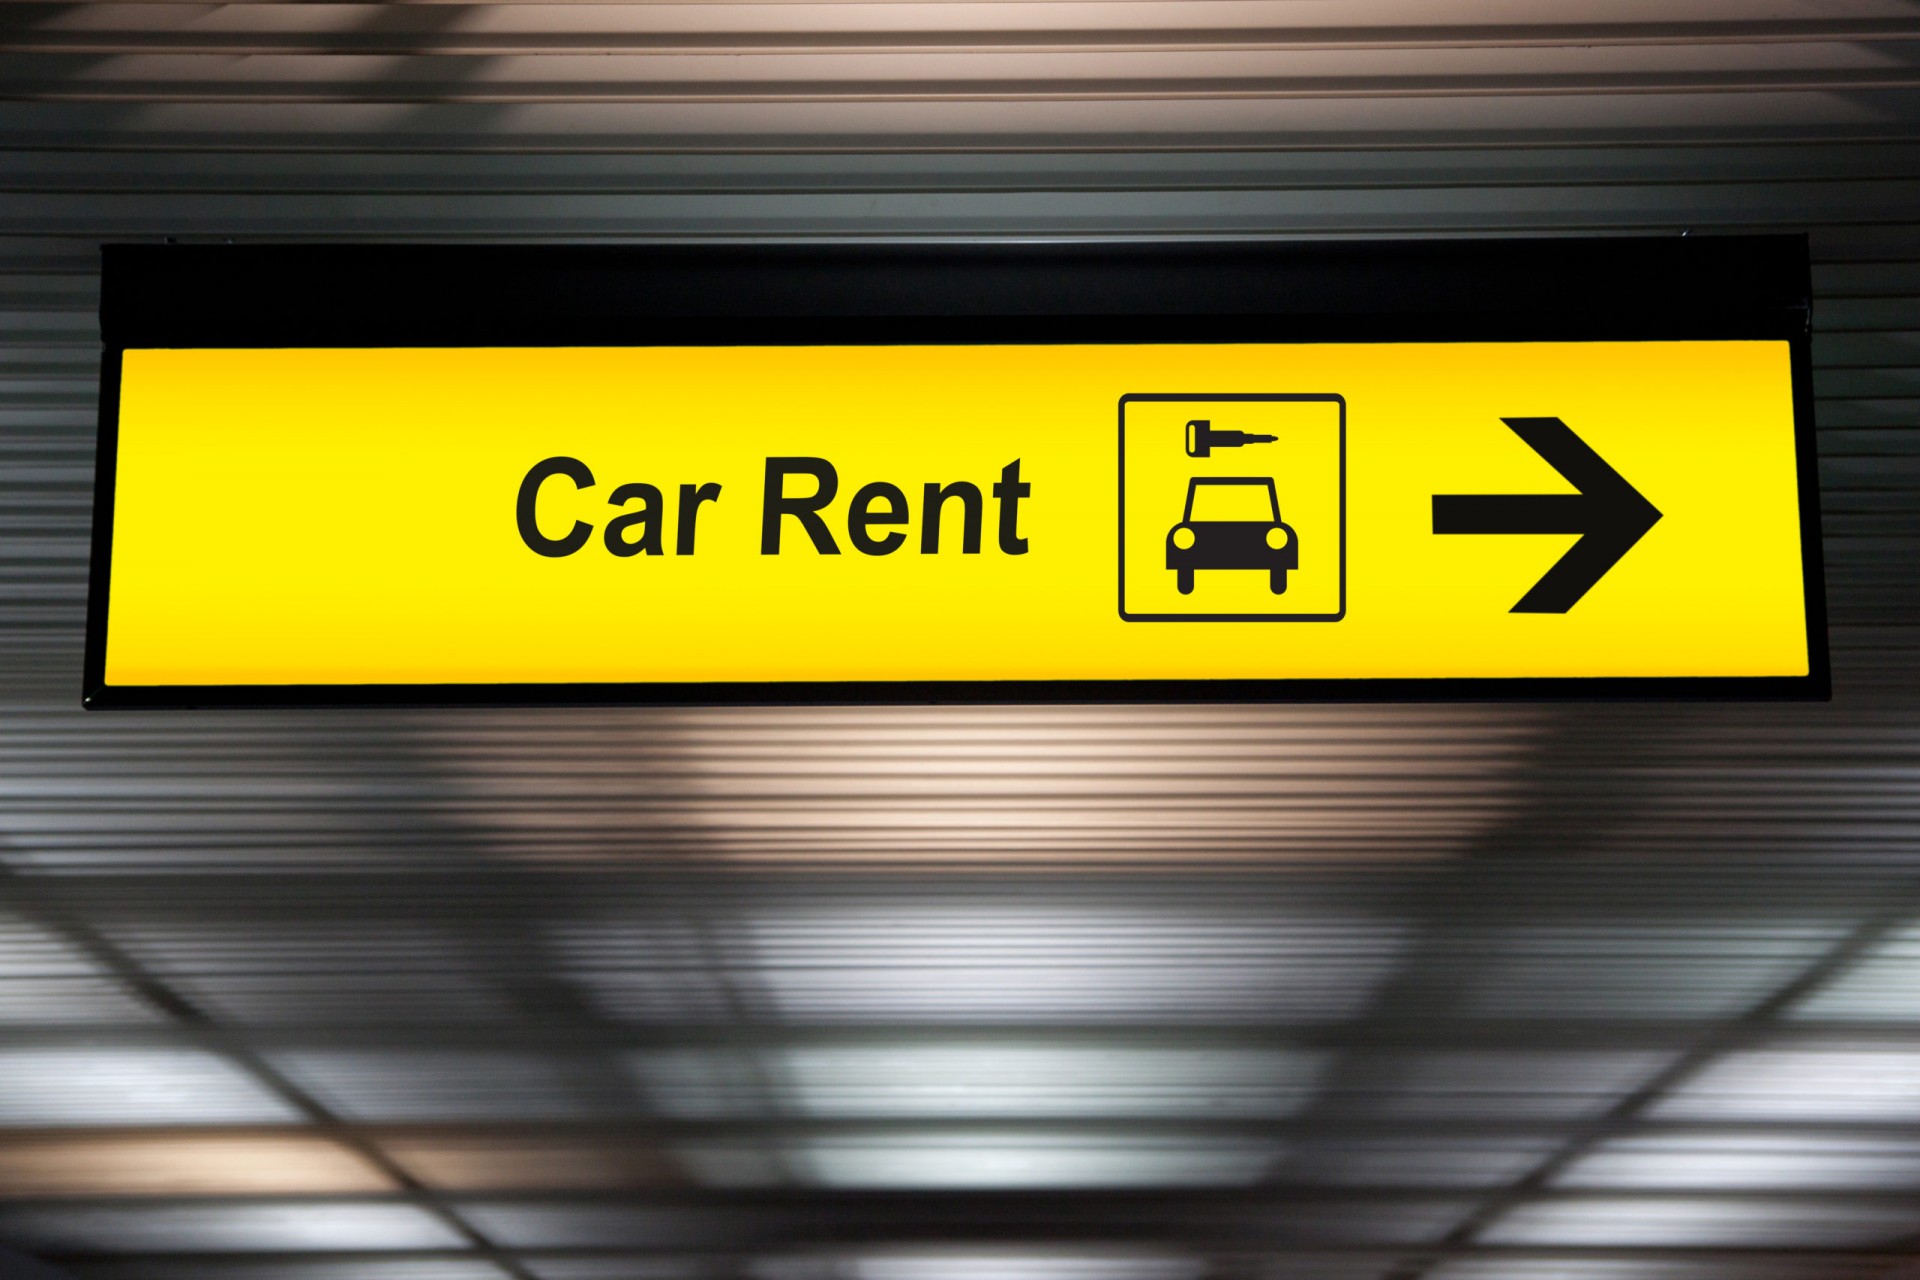 Car-rental companies look to de-fleet early due to COVID-19